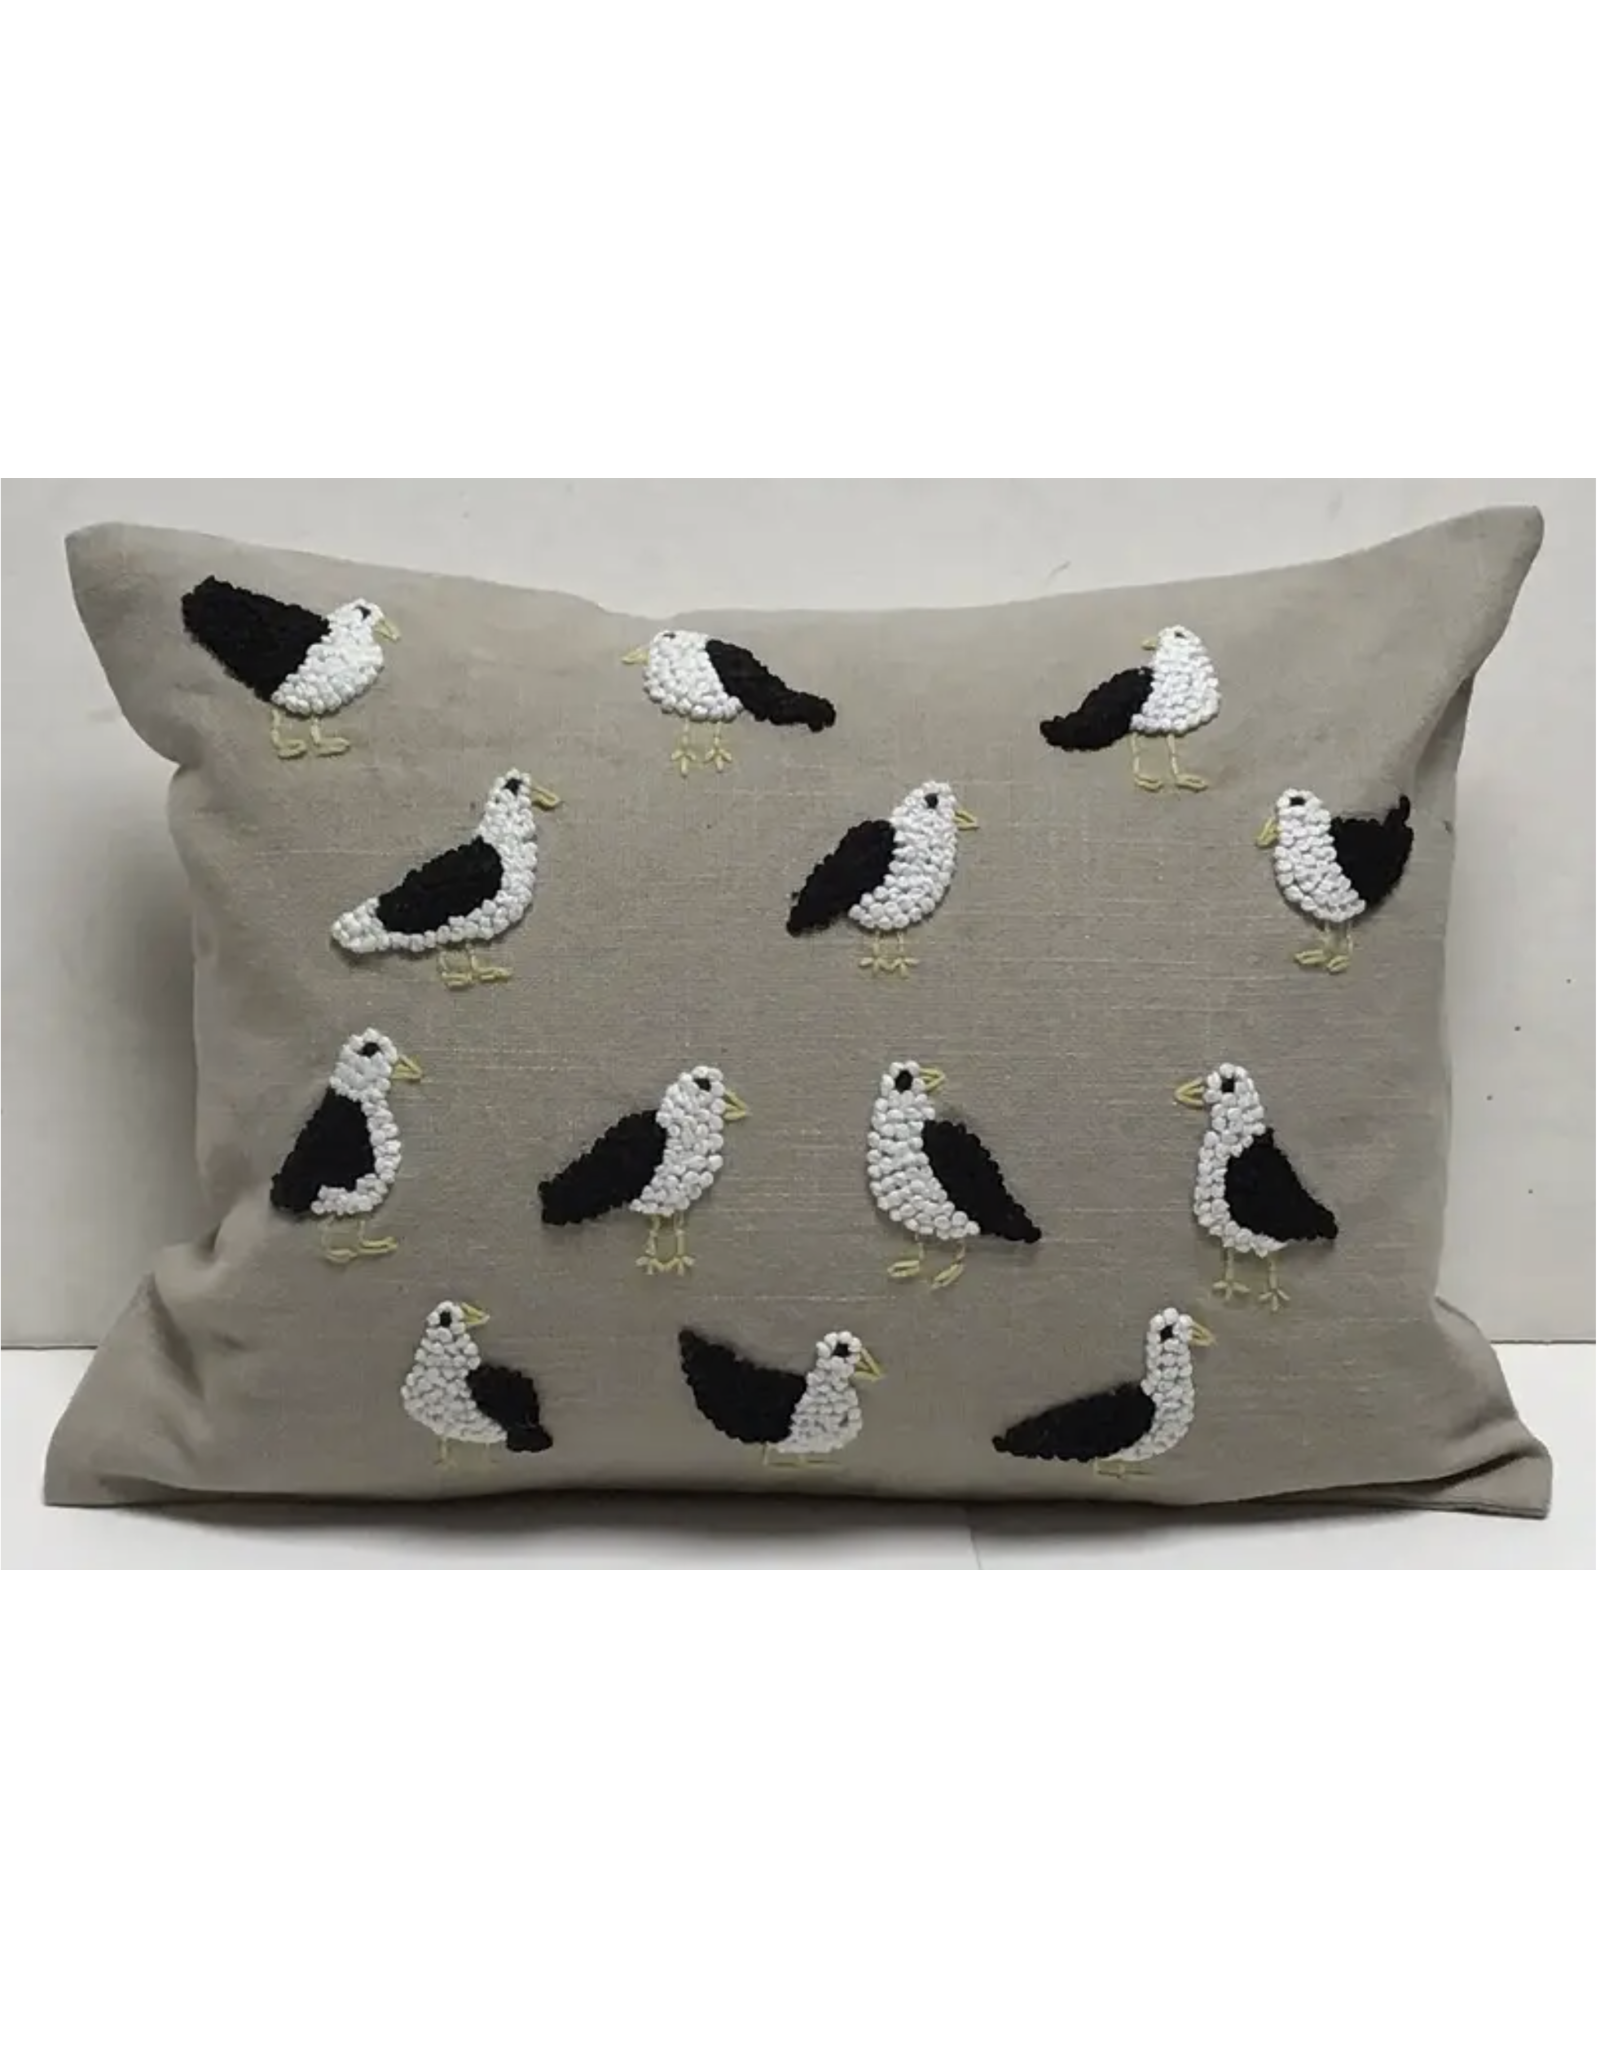 Trade roots Sea Gulls Pillow, Applique, 16", India